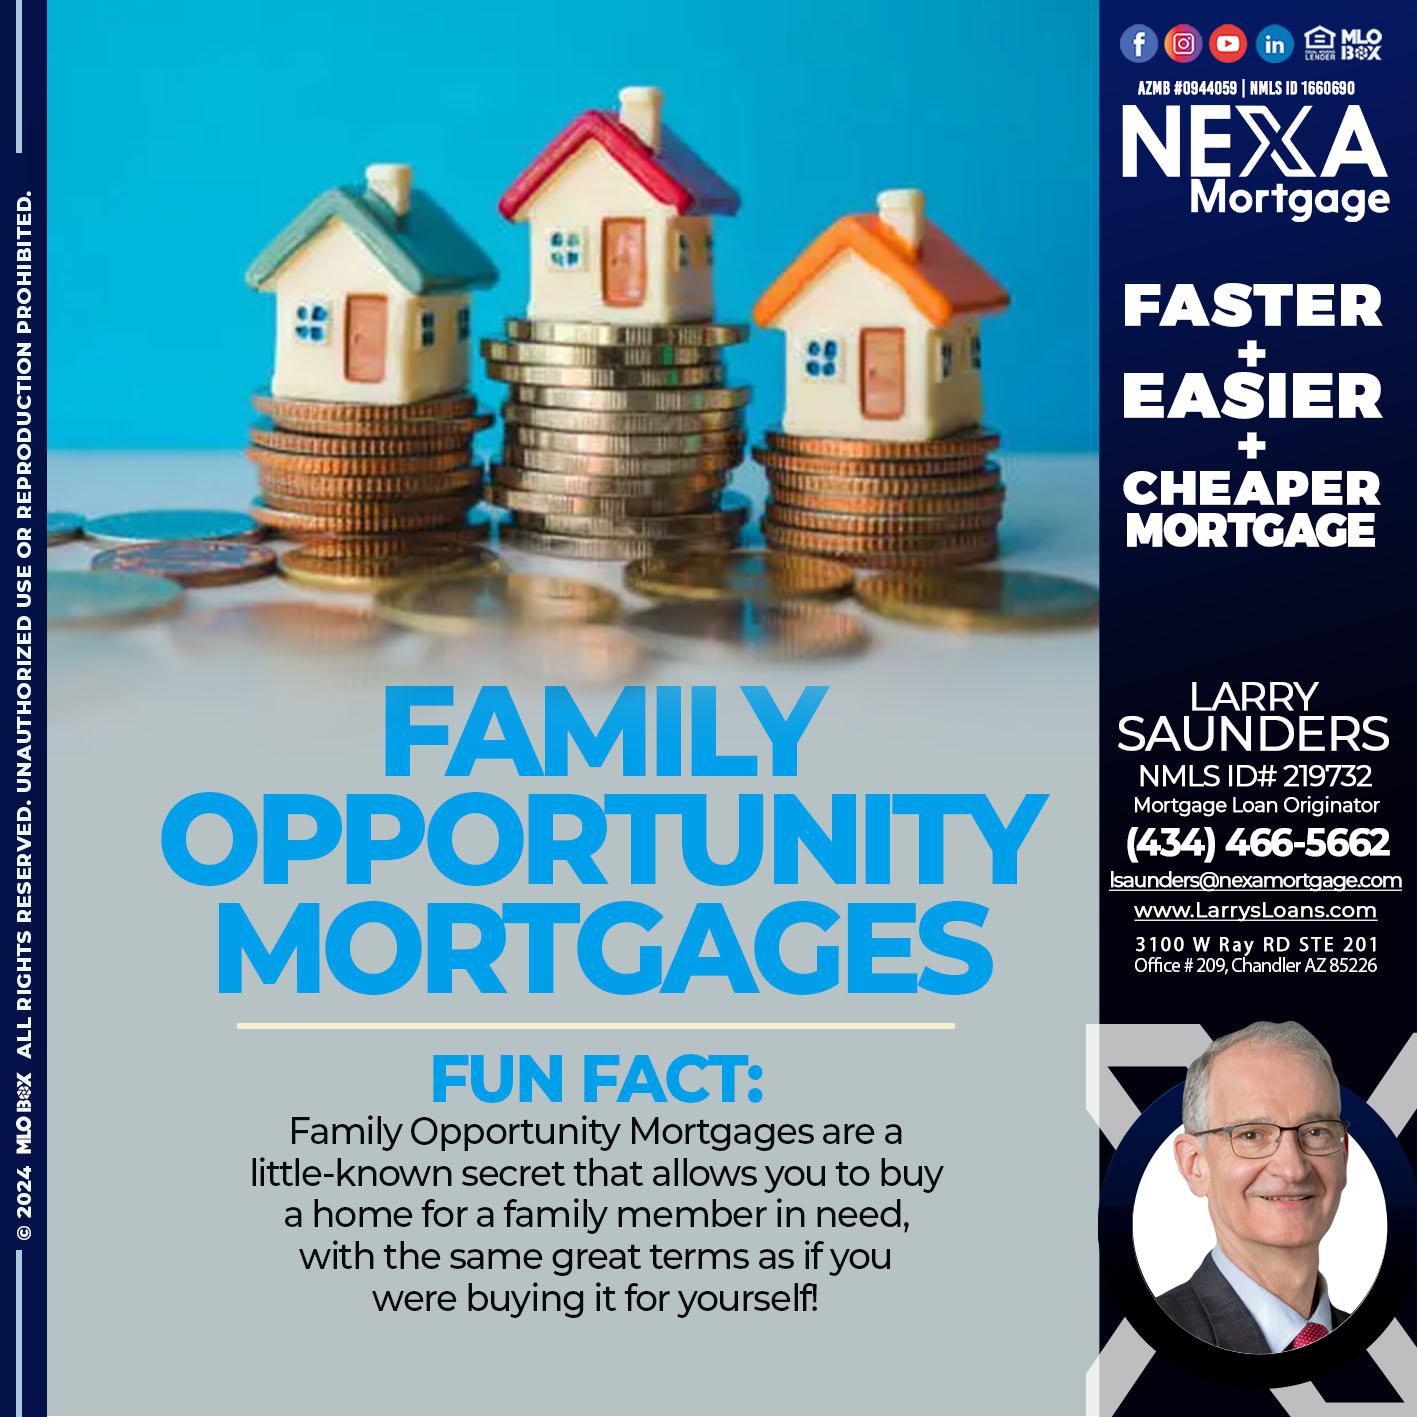 FAMILY - Larry Saunders -Mortgage Loan Originator